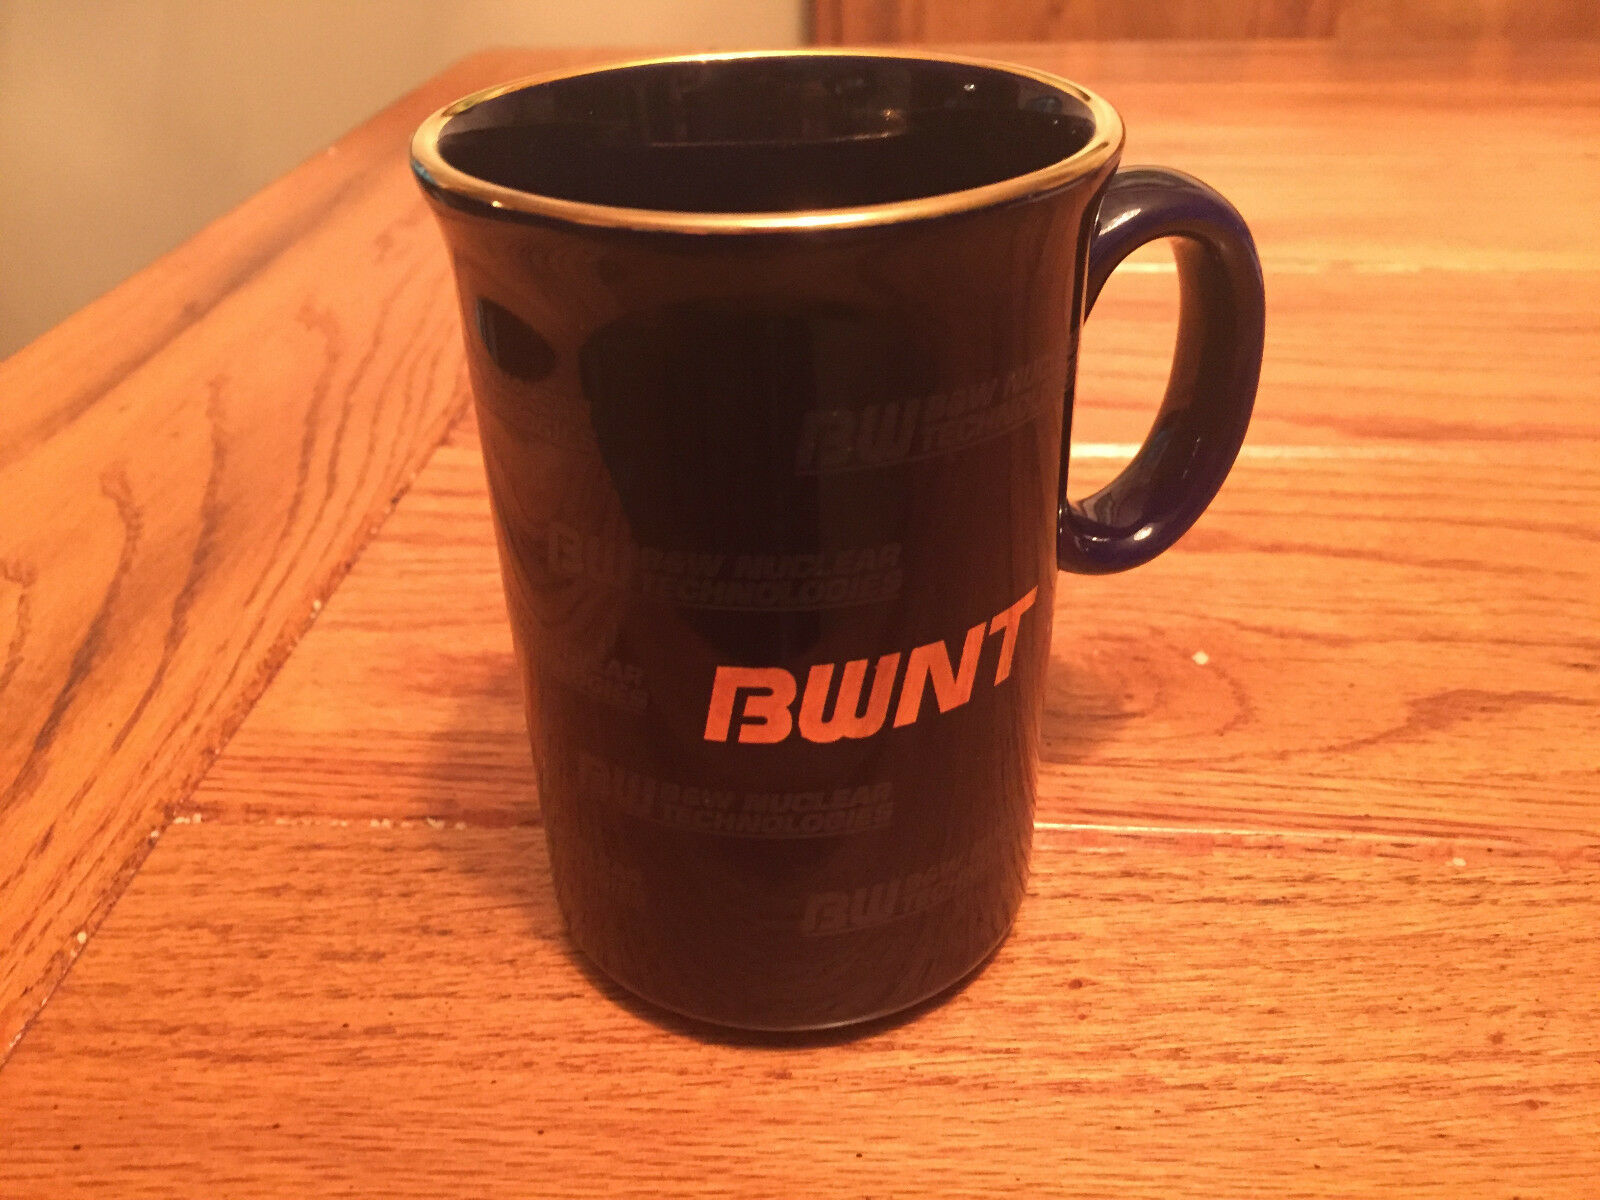 New - Bwnt B & W Nuclear Technologies Cup Mug